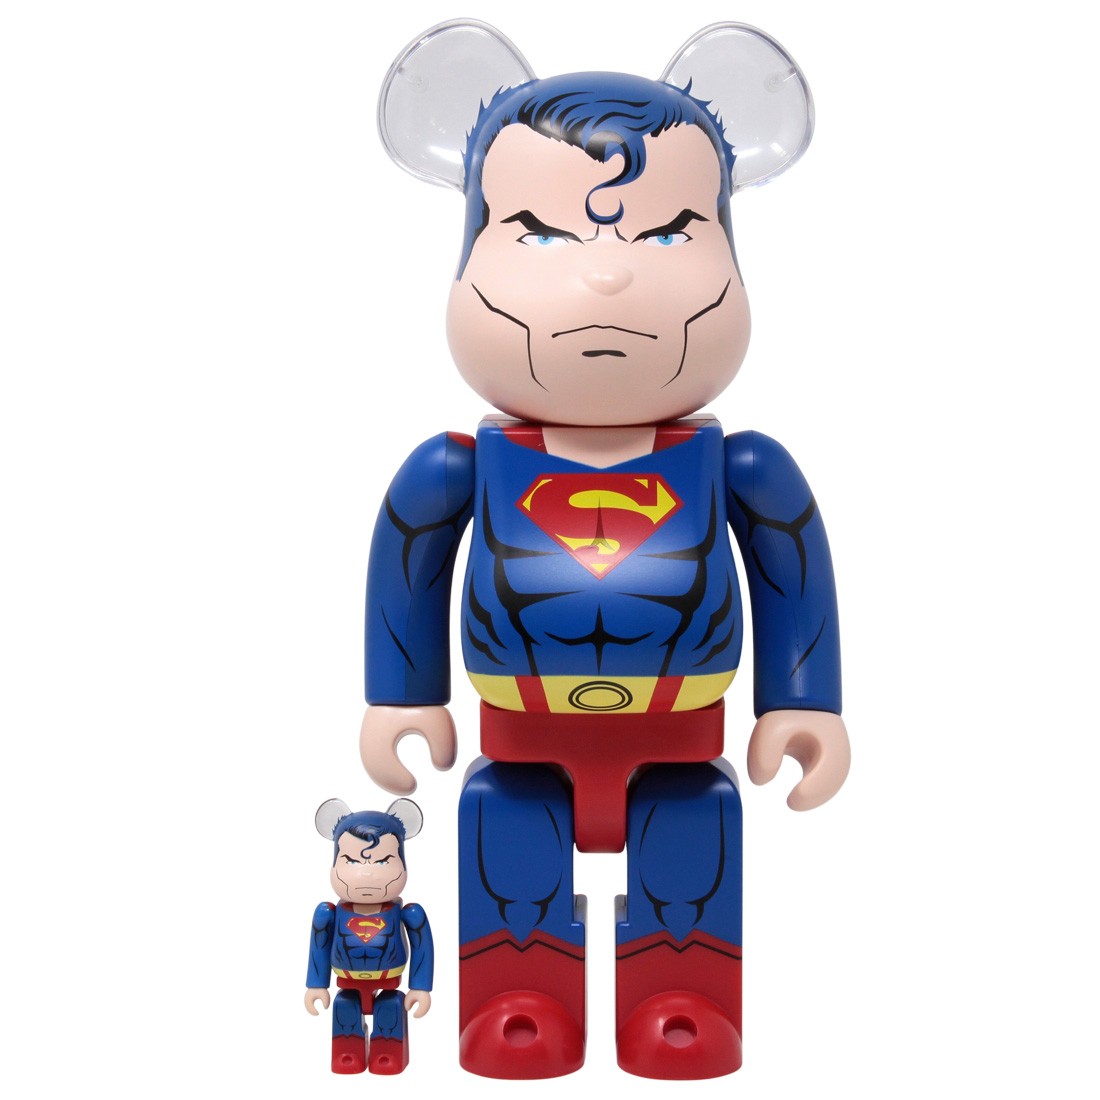 Medicom DC Superman Batman Hush Ver. 100% 400% Bearbrick Figure Set (blue)